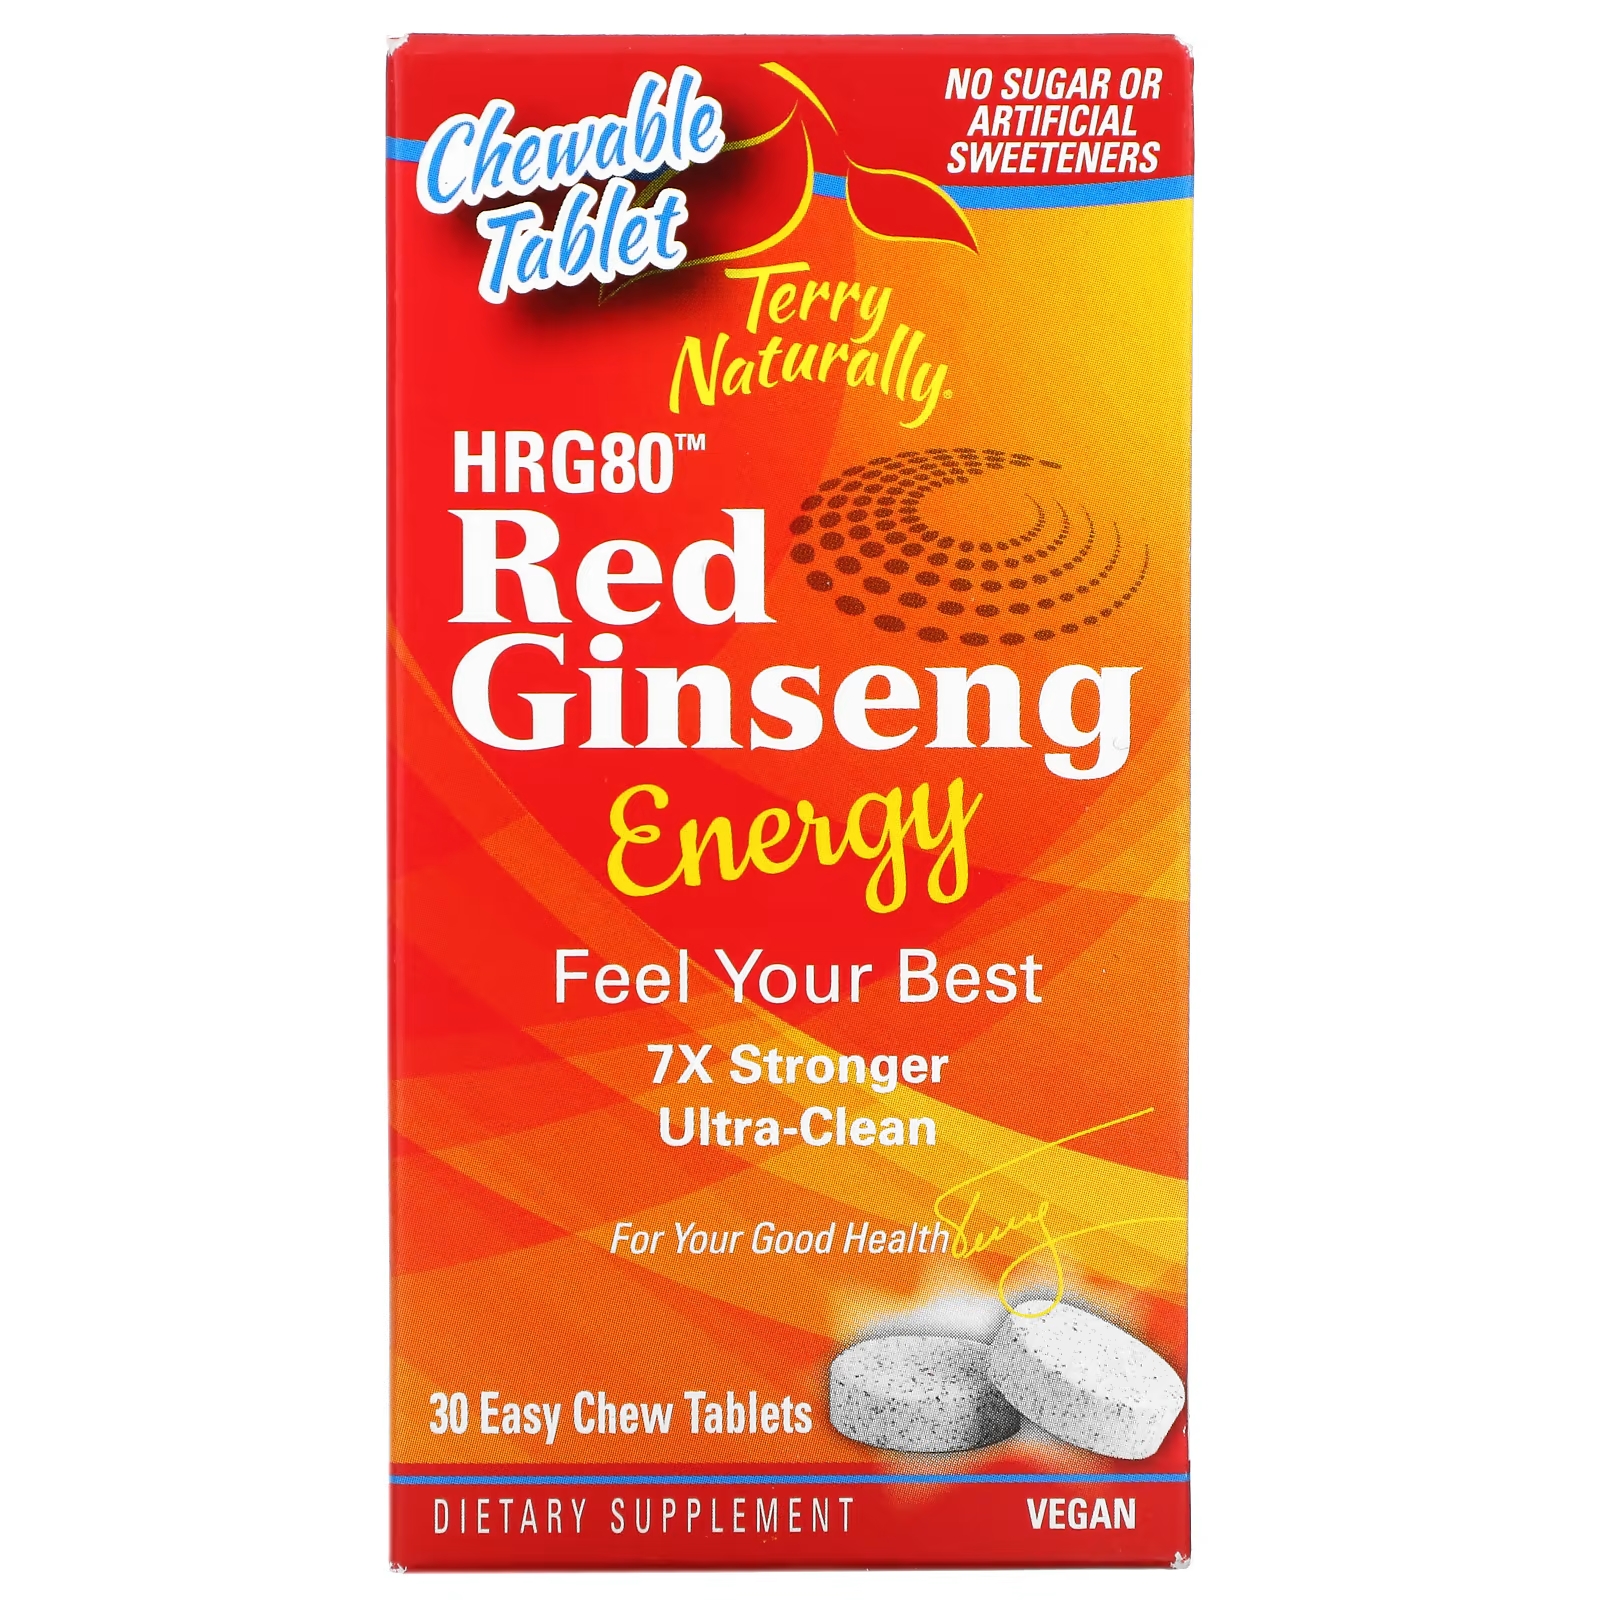 Пищевая Добавка Terry Naturally HRG80 Red Ginseng Energy, 30 жевательных таблеток пищевая добавка terry naturally red sage plus hrg80 с красным женьшенем 30 капсул